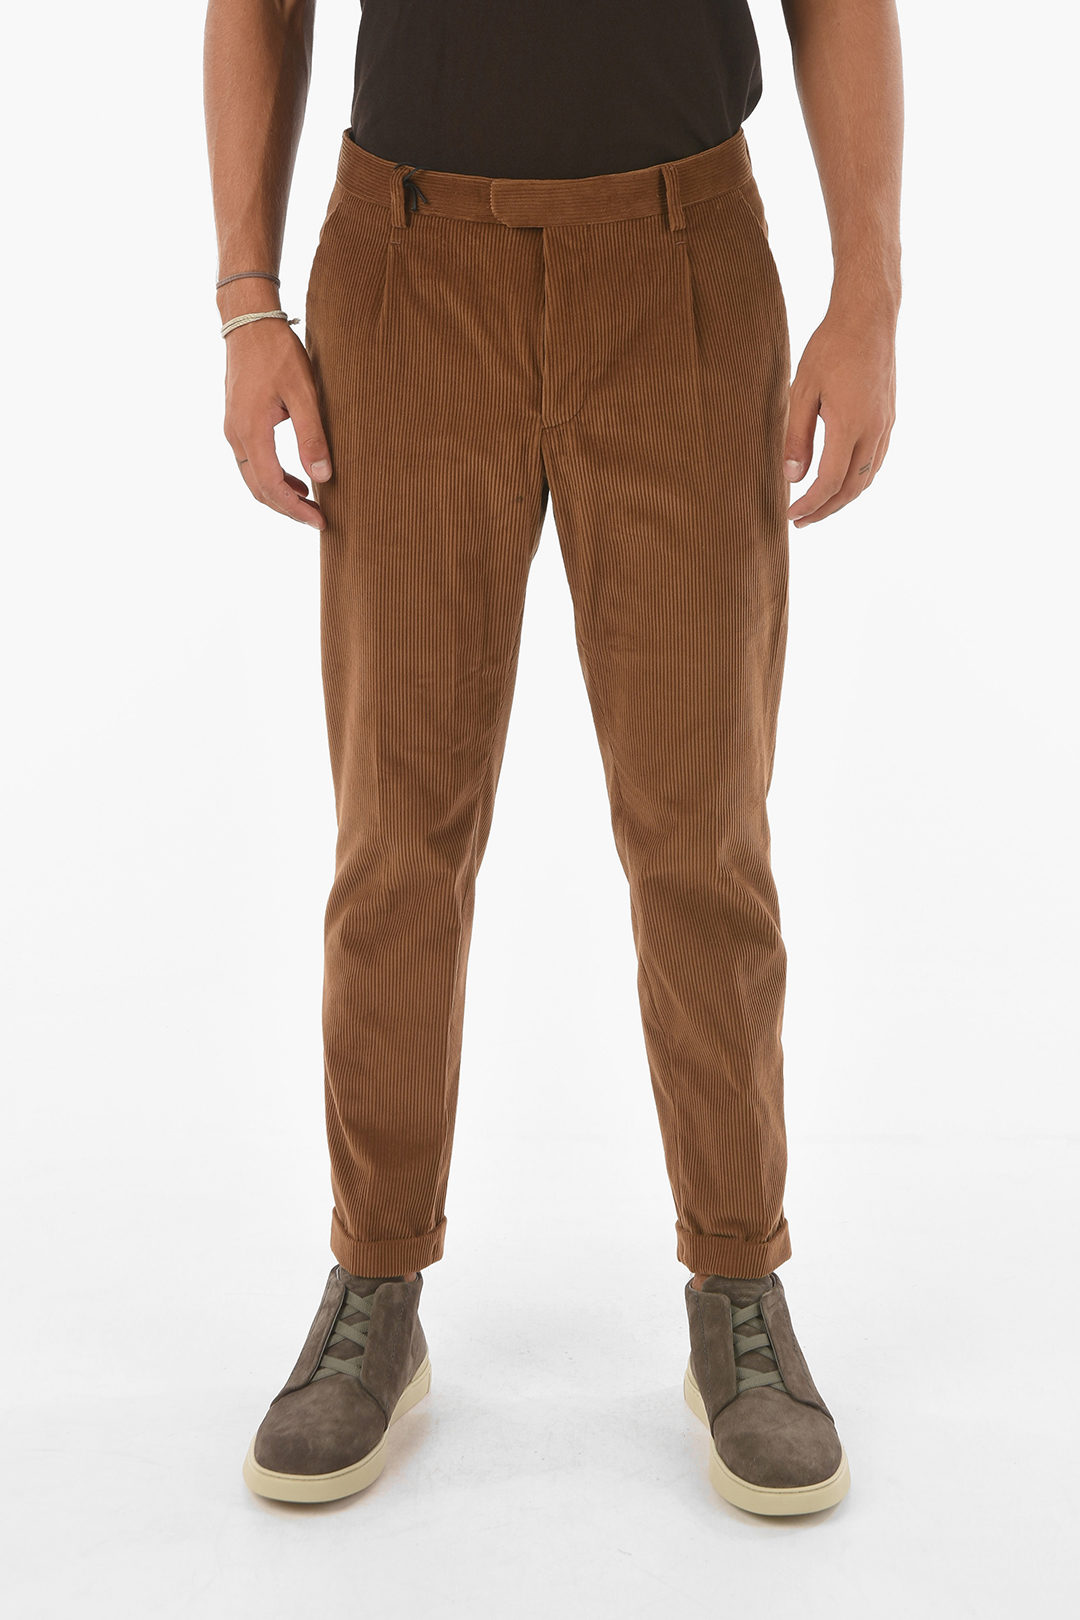 LL Bean Corduroy Pants Trousers Mens 38 X 30 Brown Cotton Cuffed Pleated |  eBay